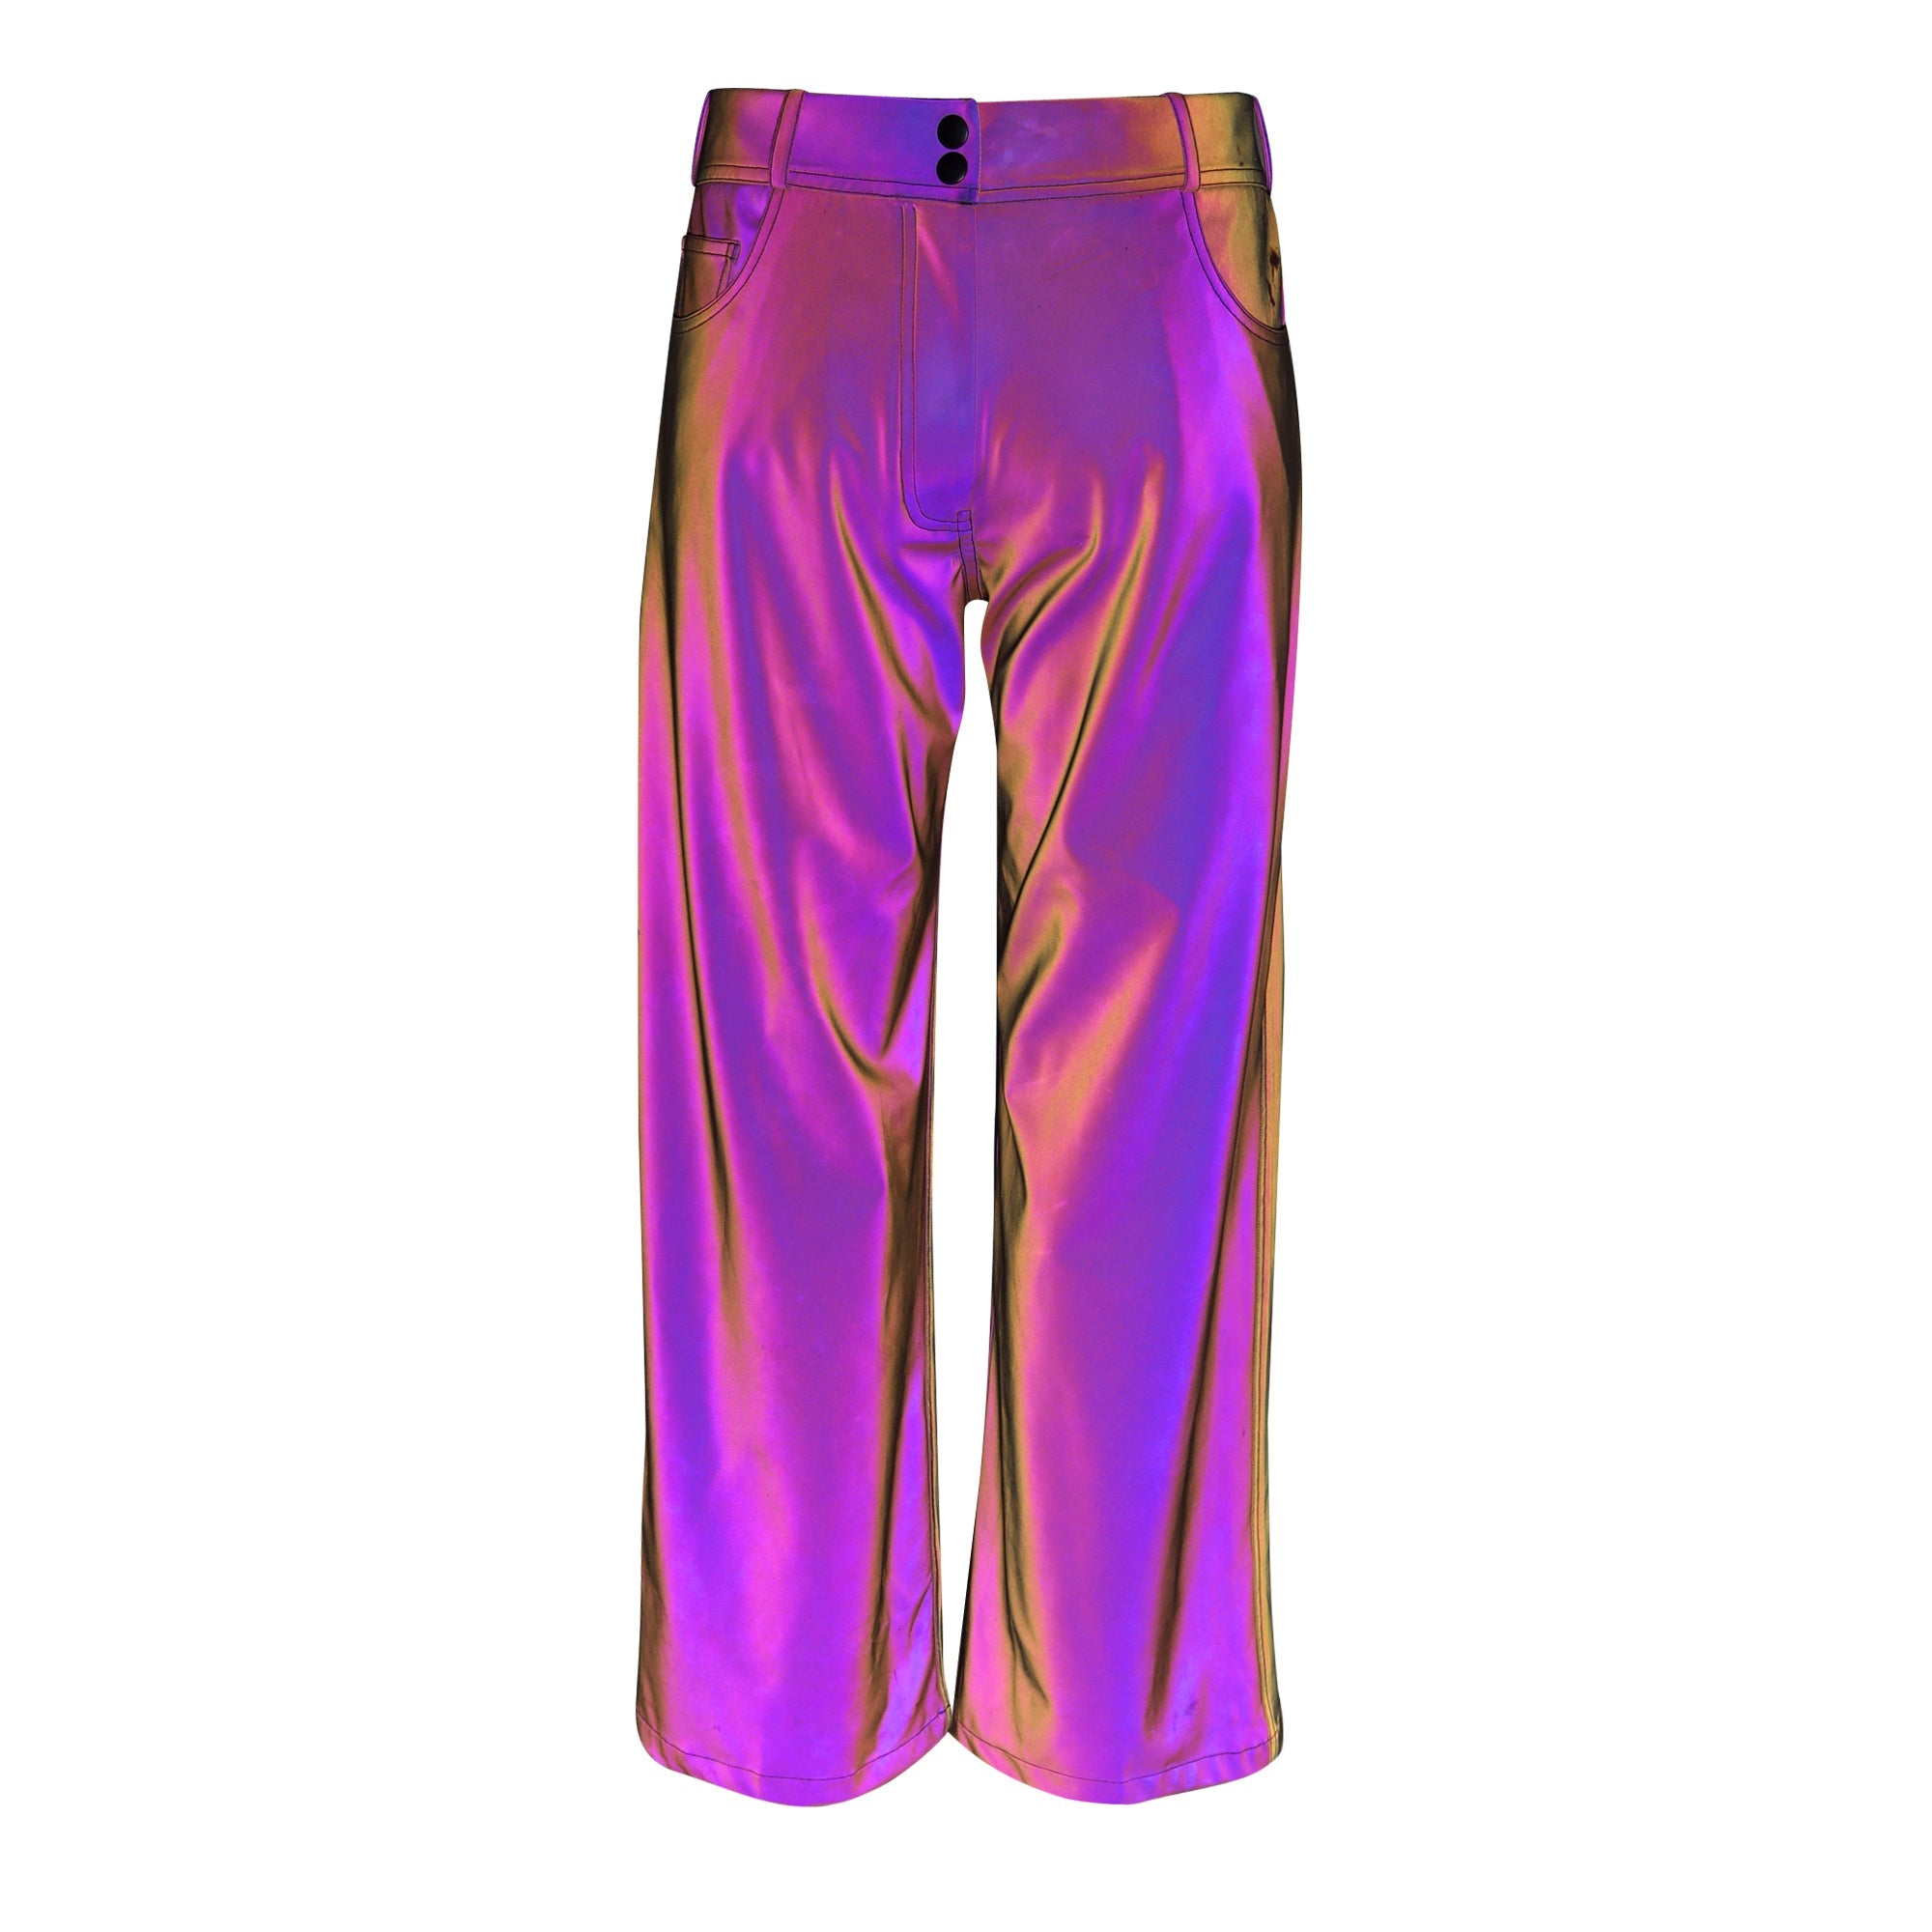 Purple reflective pants